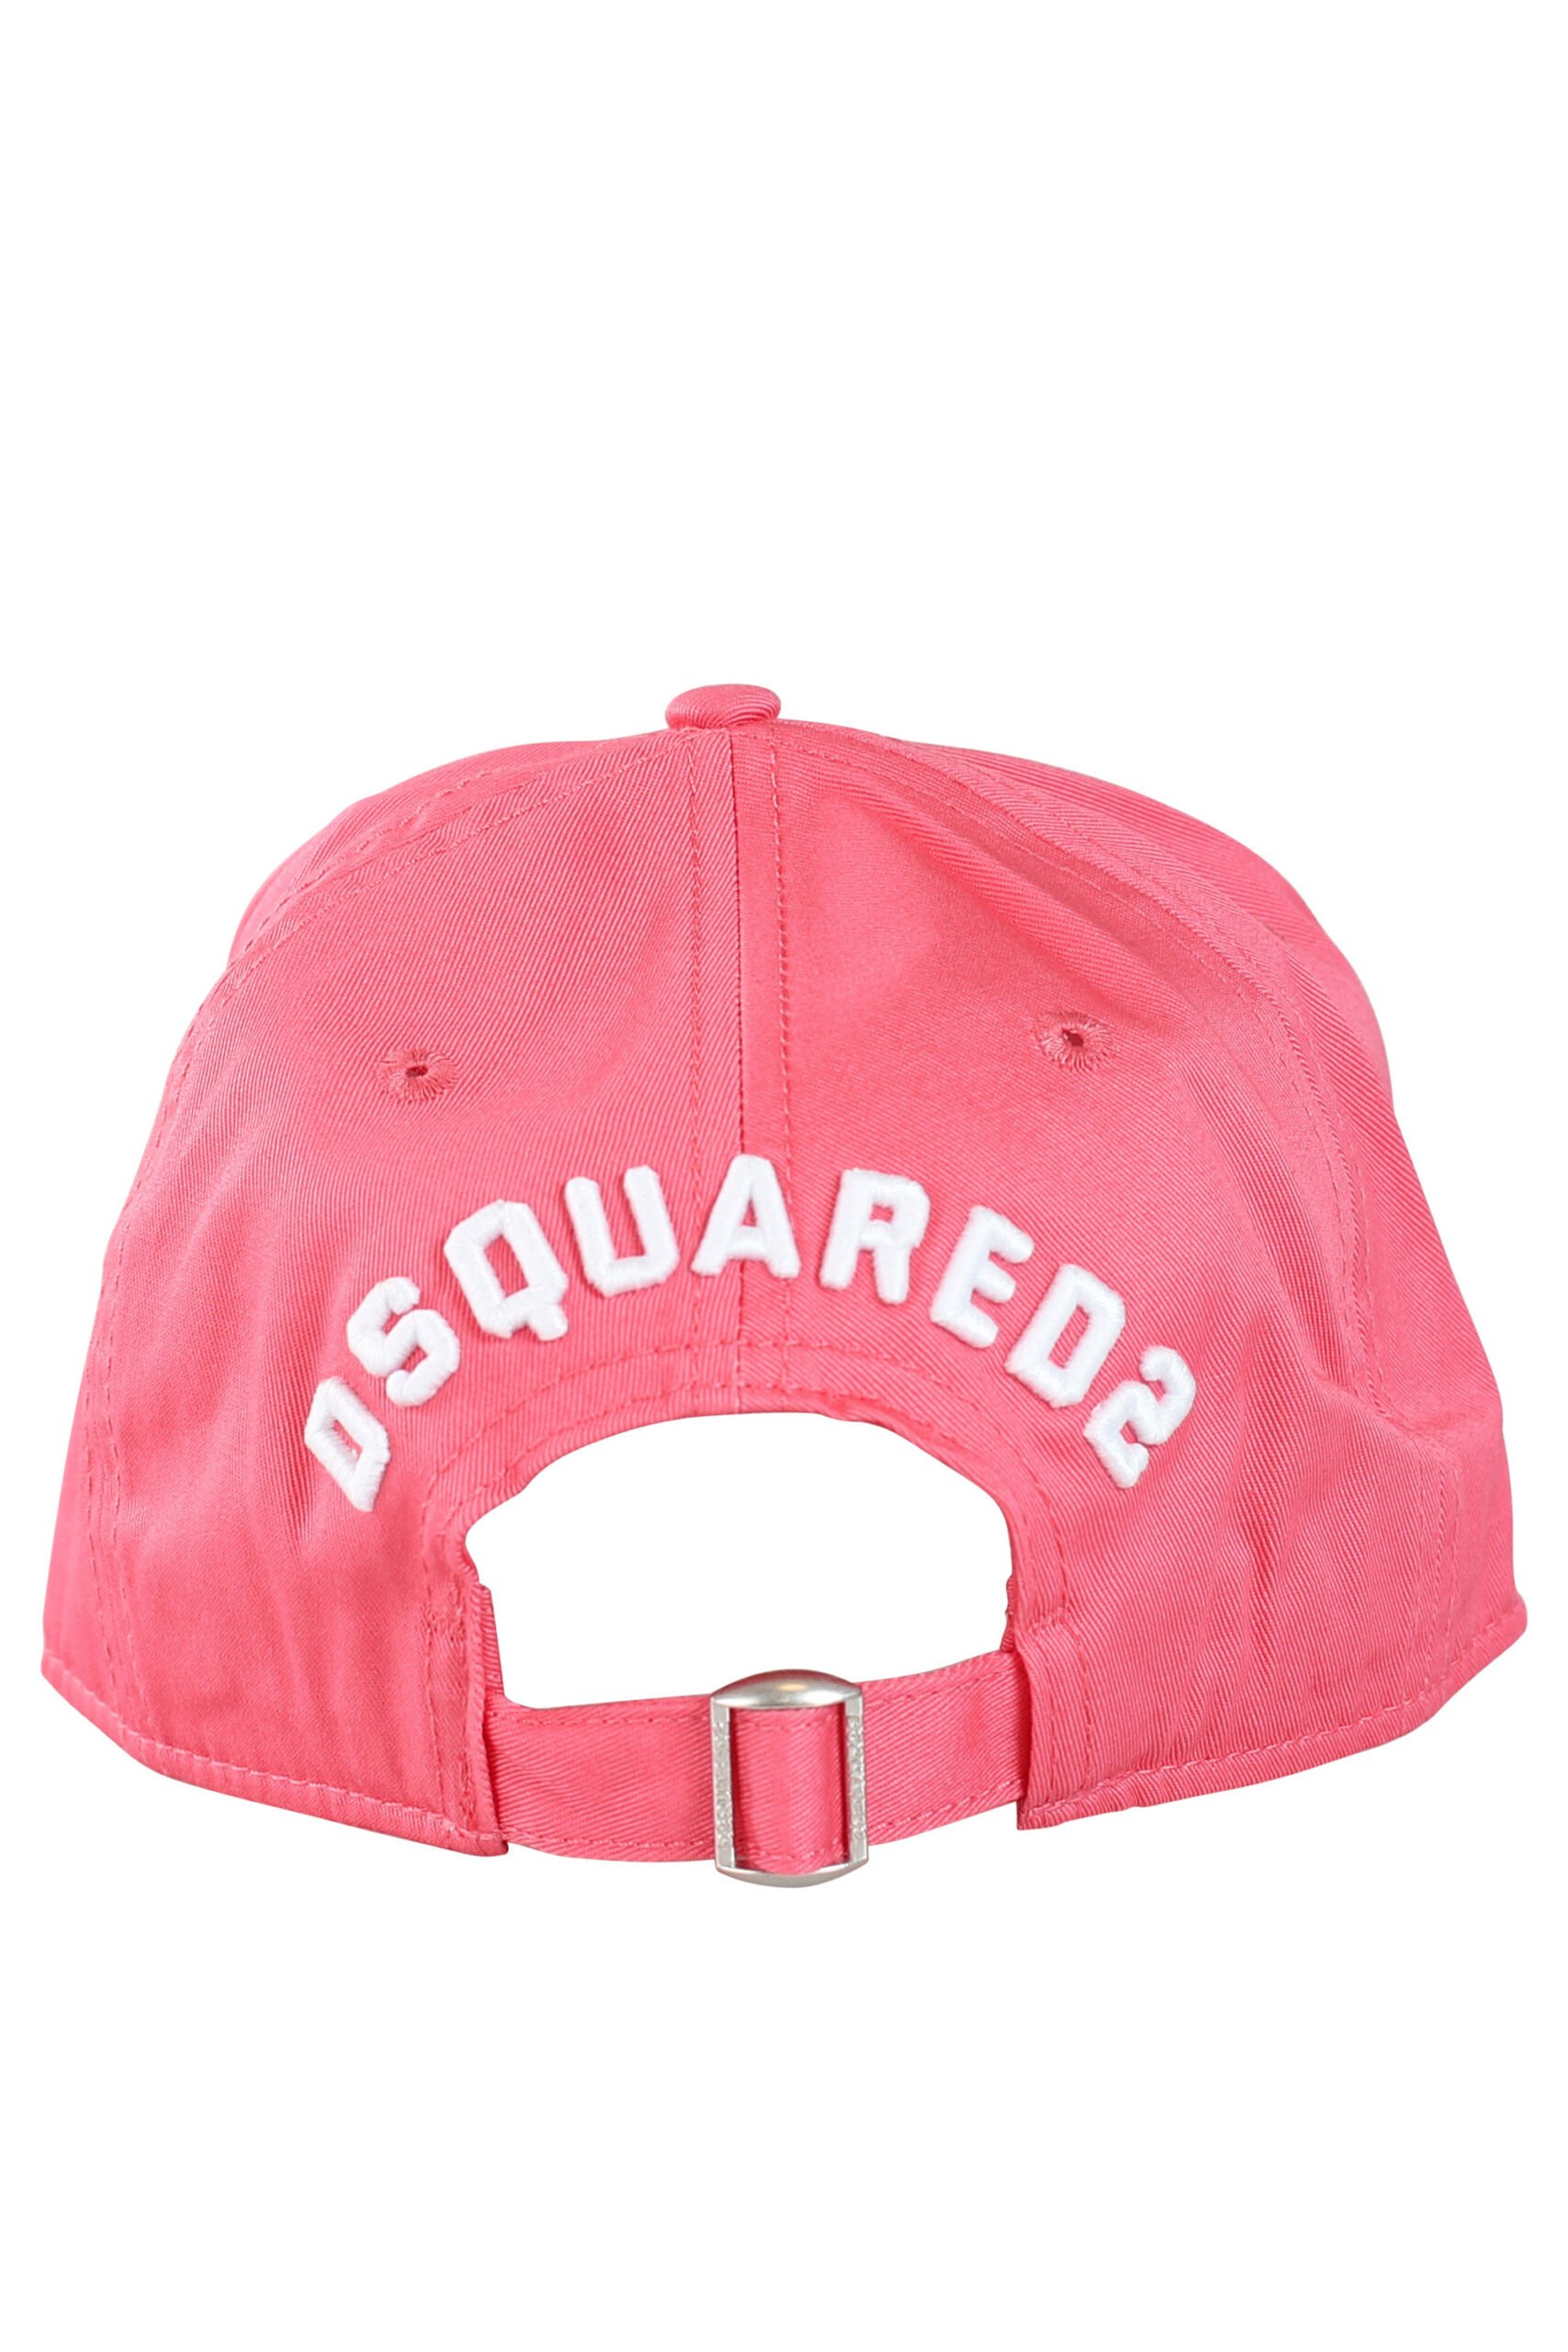 Dsquared2 - Gorra rosa con logo icon blanco bordado - BLS Fashion